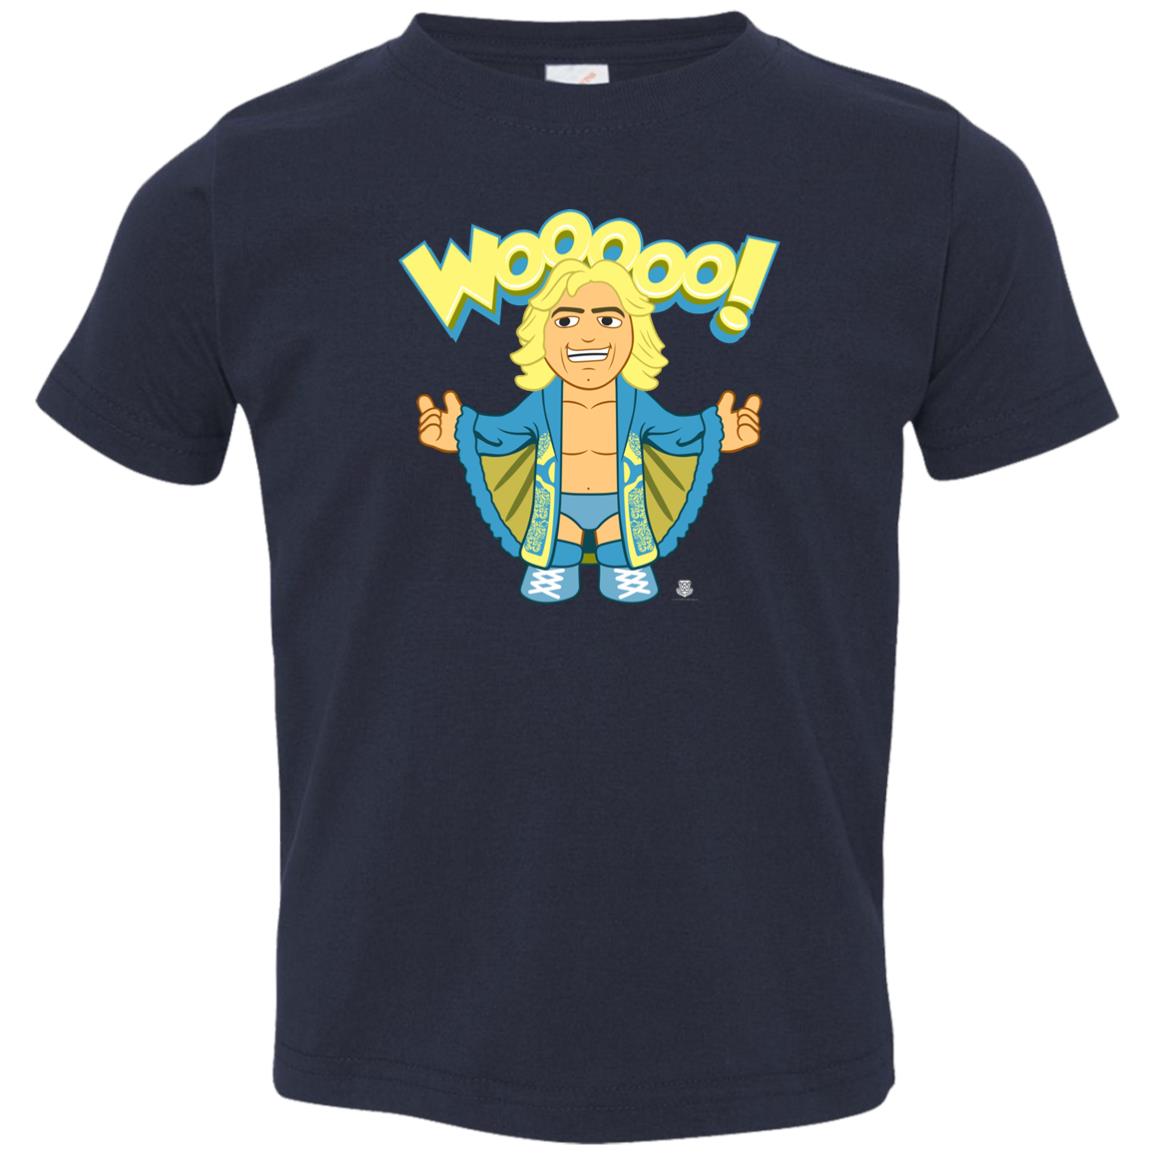 mini-ric Wooooo Man 3321 Toddler Jersey T-Shirt